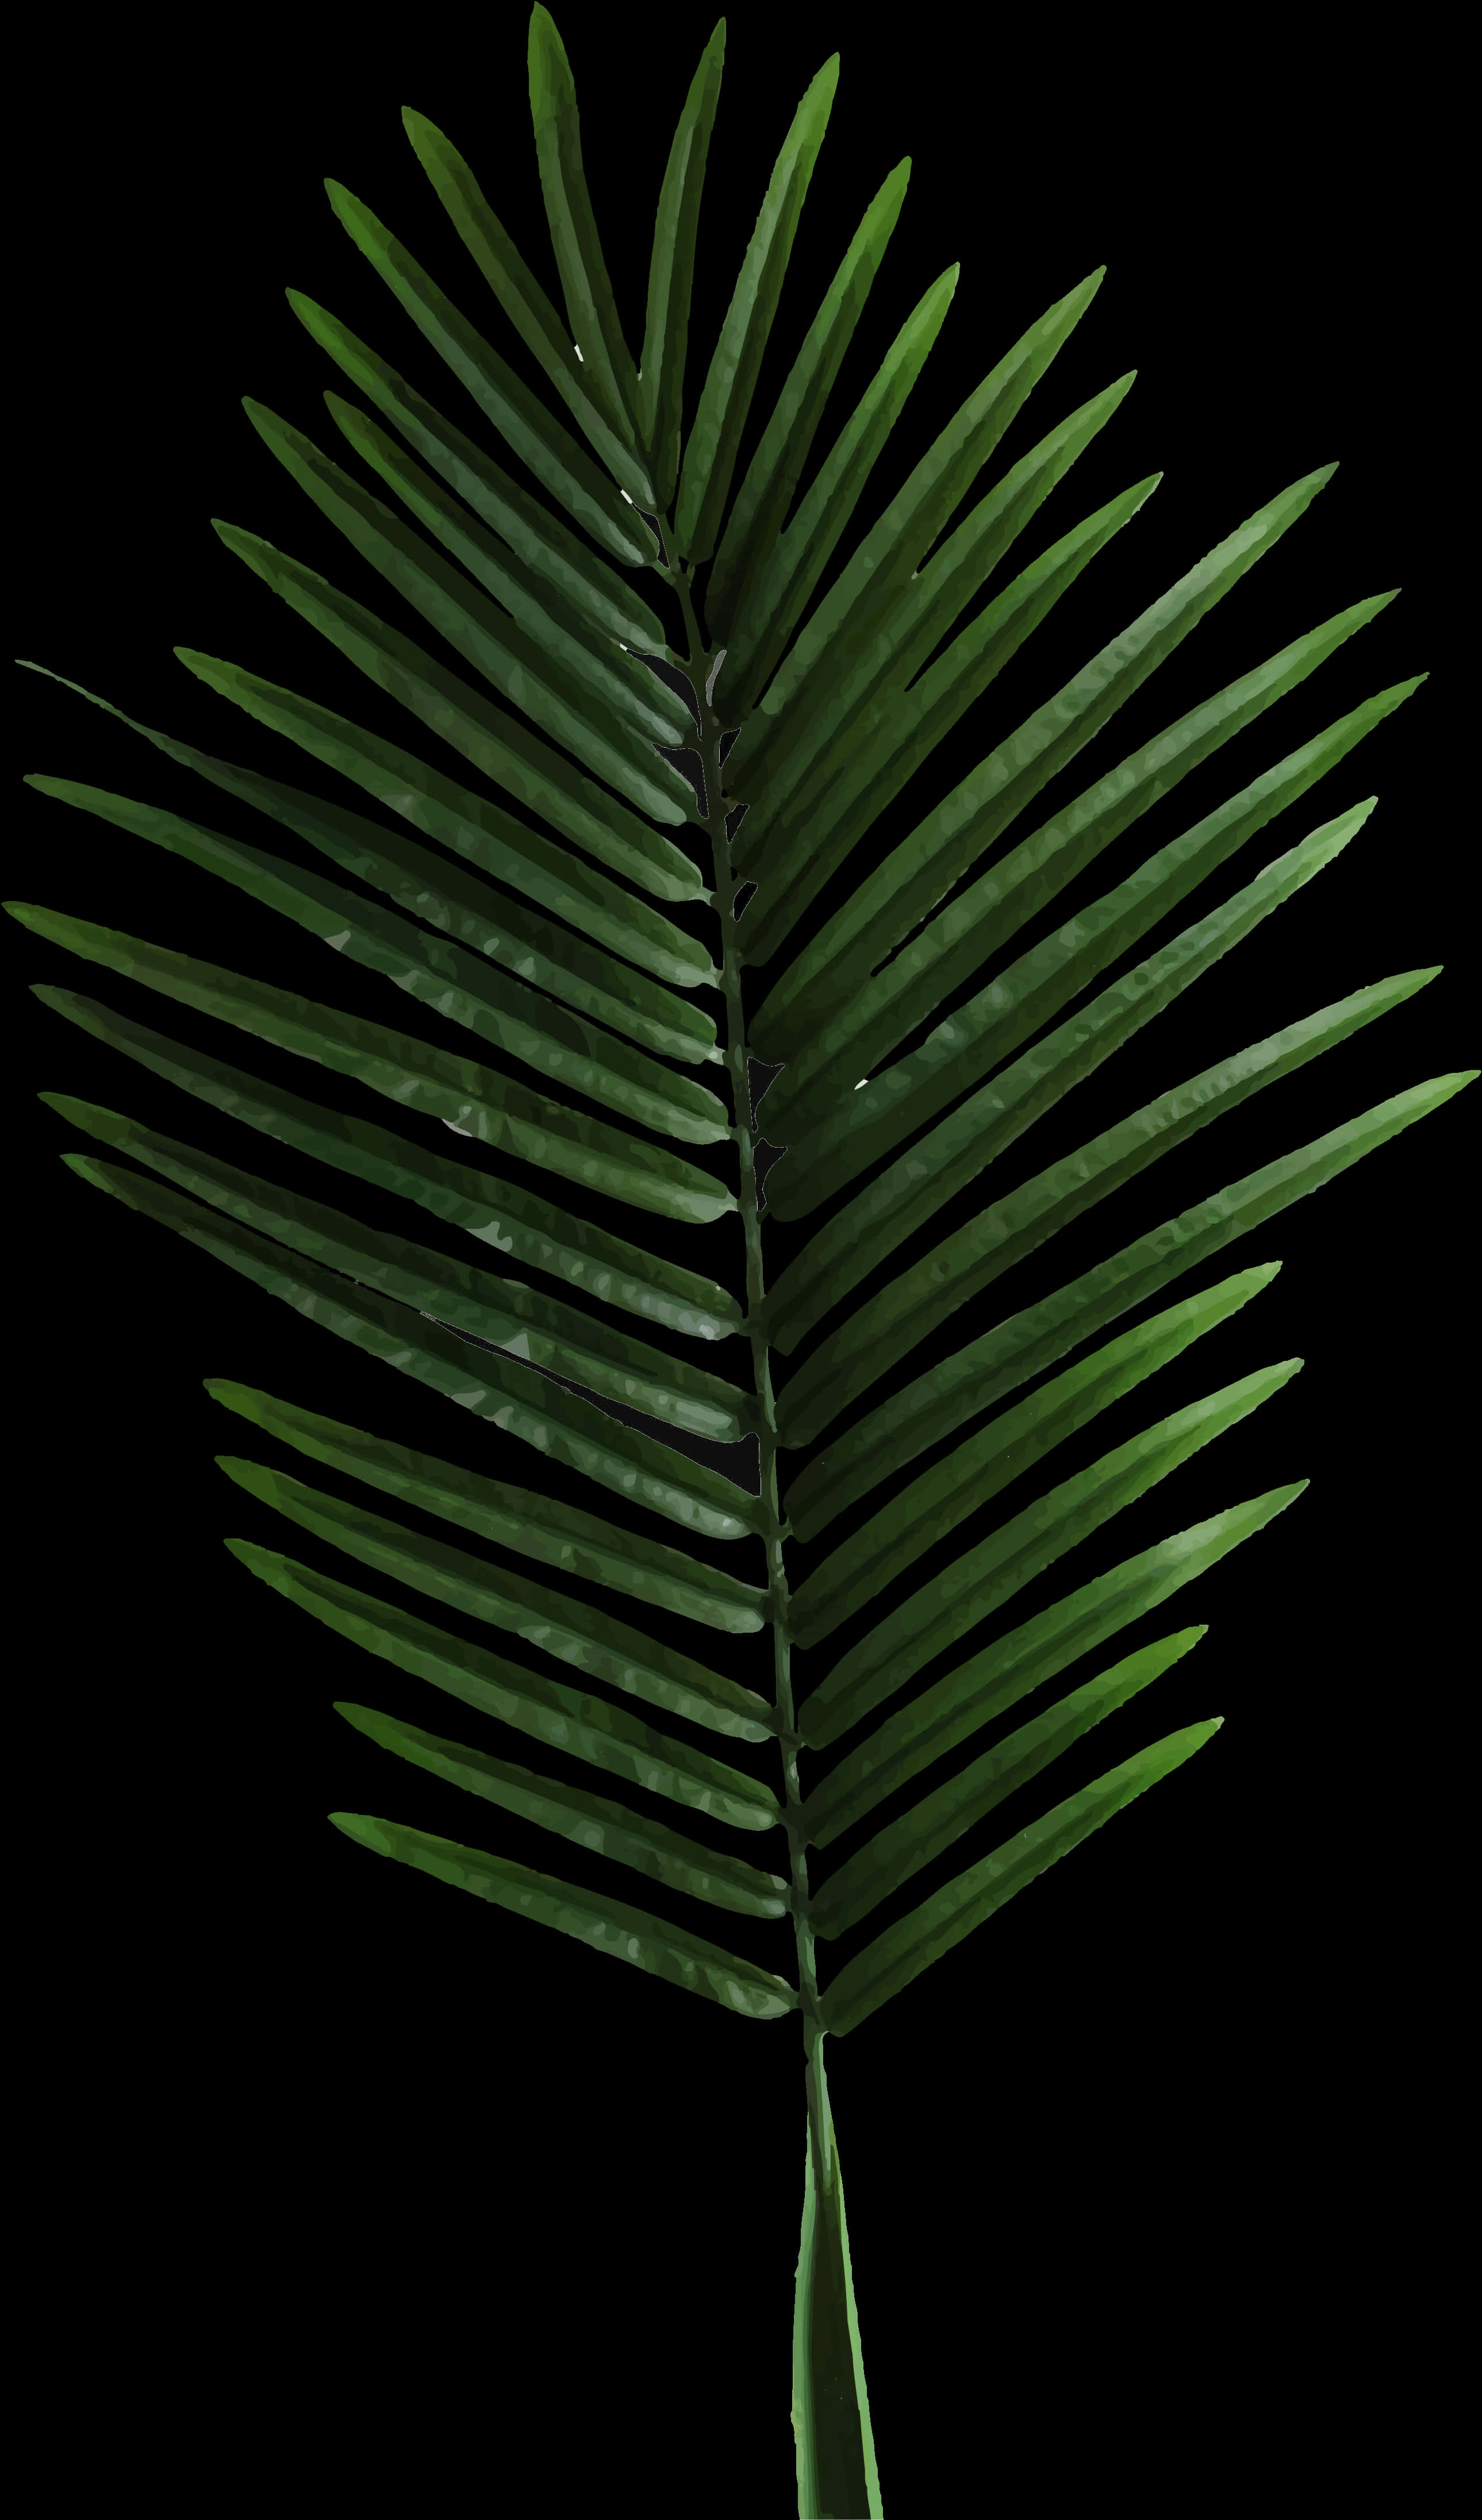 Palm Frond Isolatedon Black